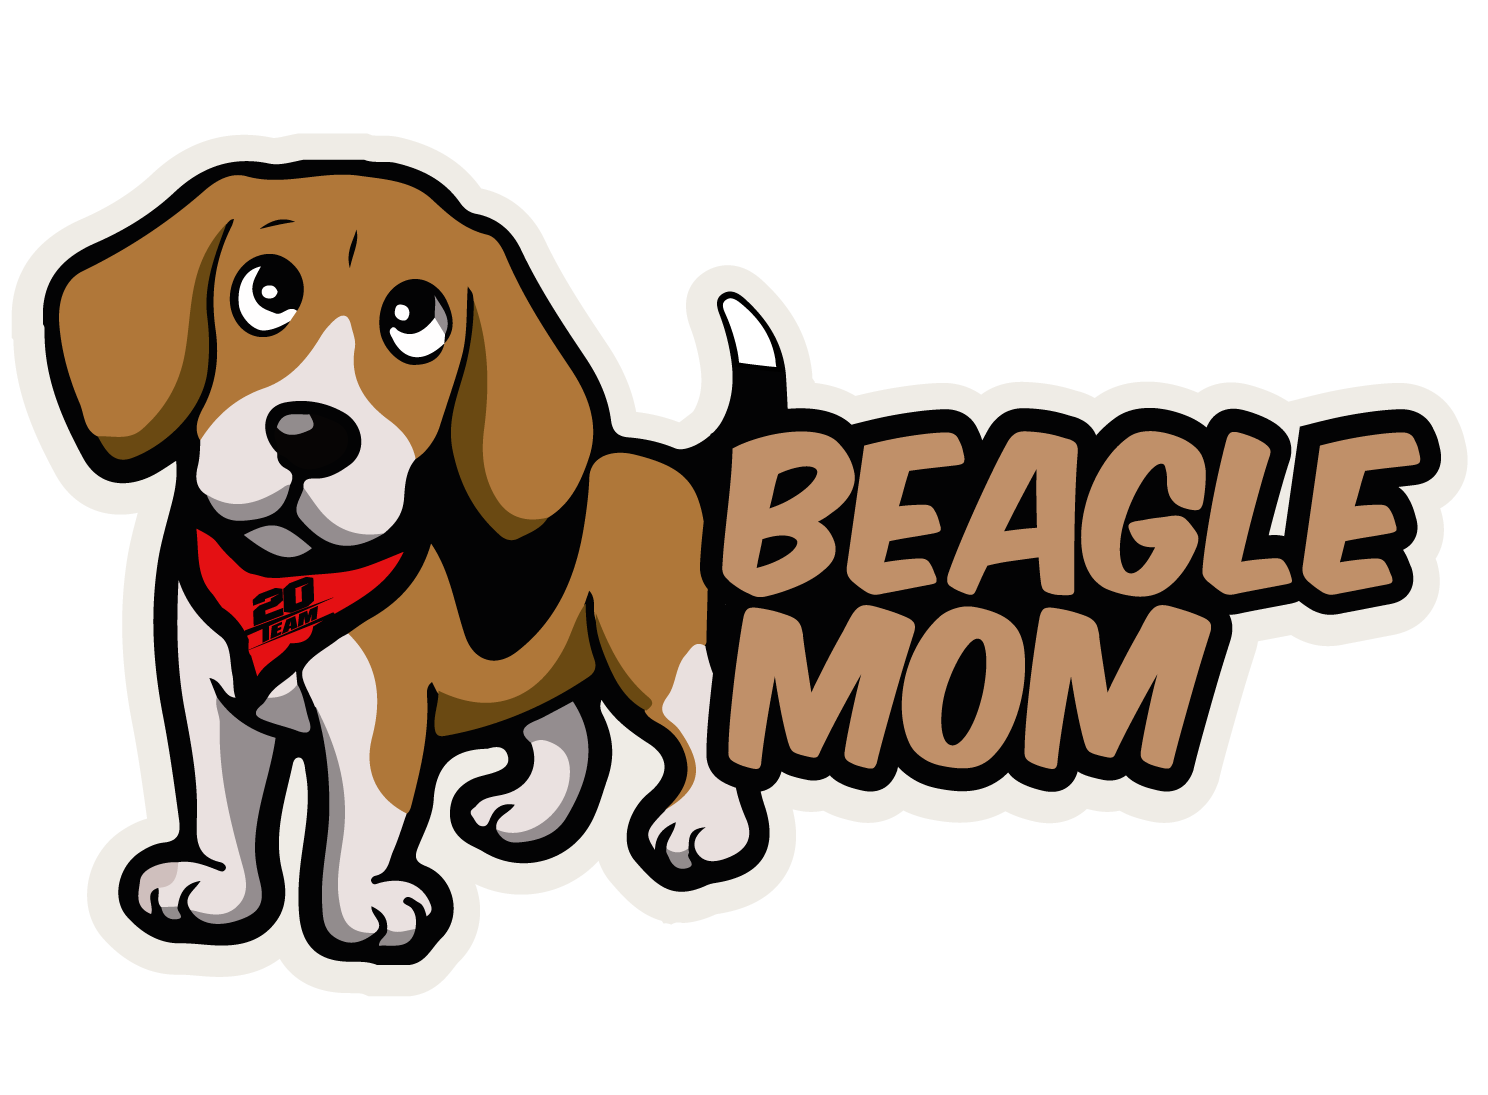 Buttpatch "BEAGLE MOM"